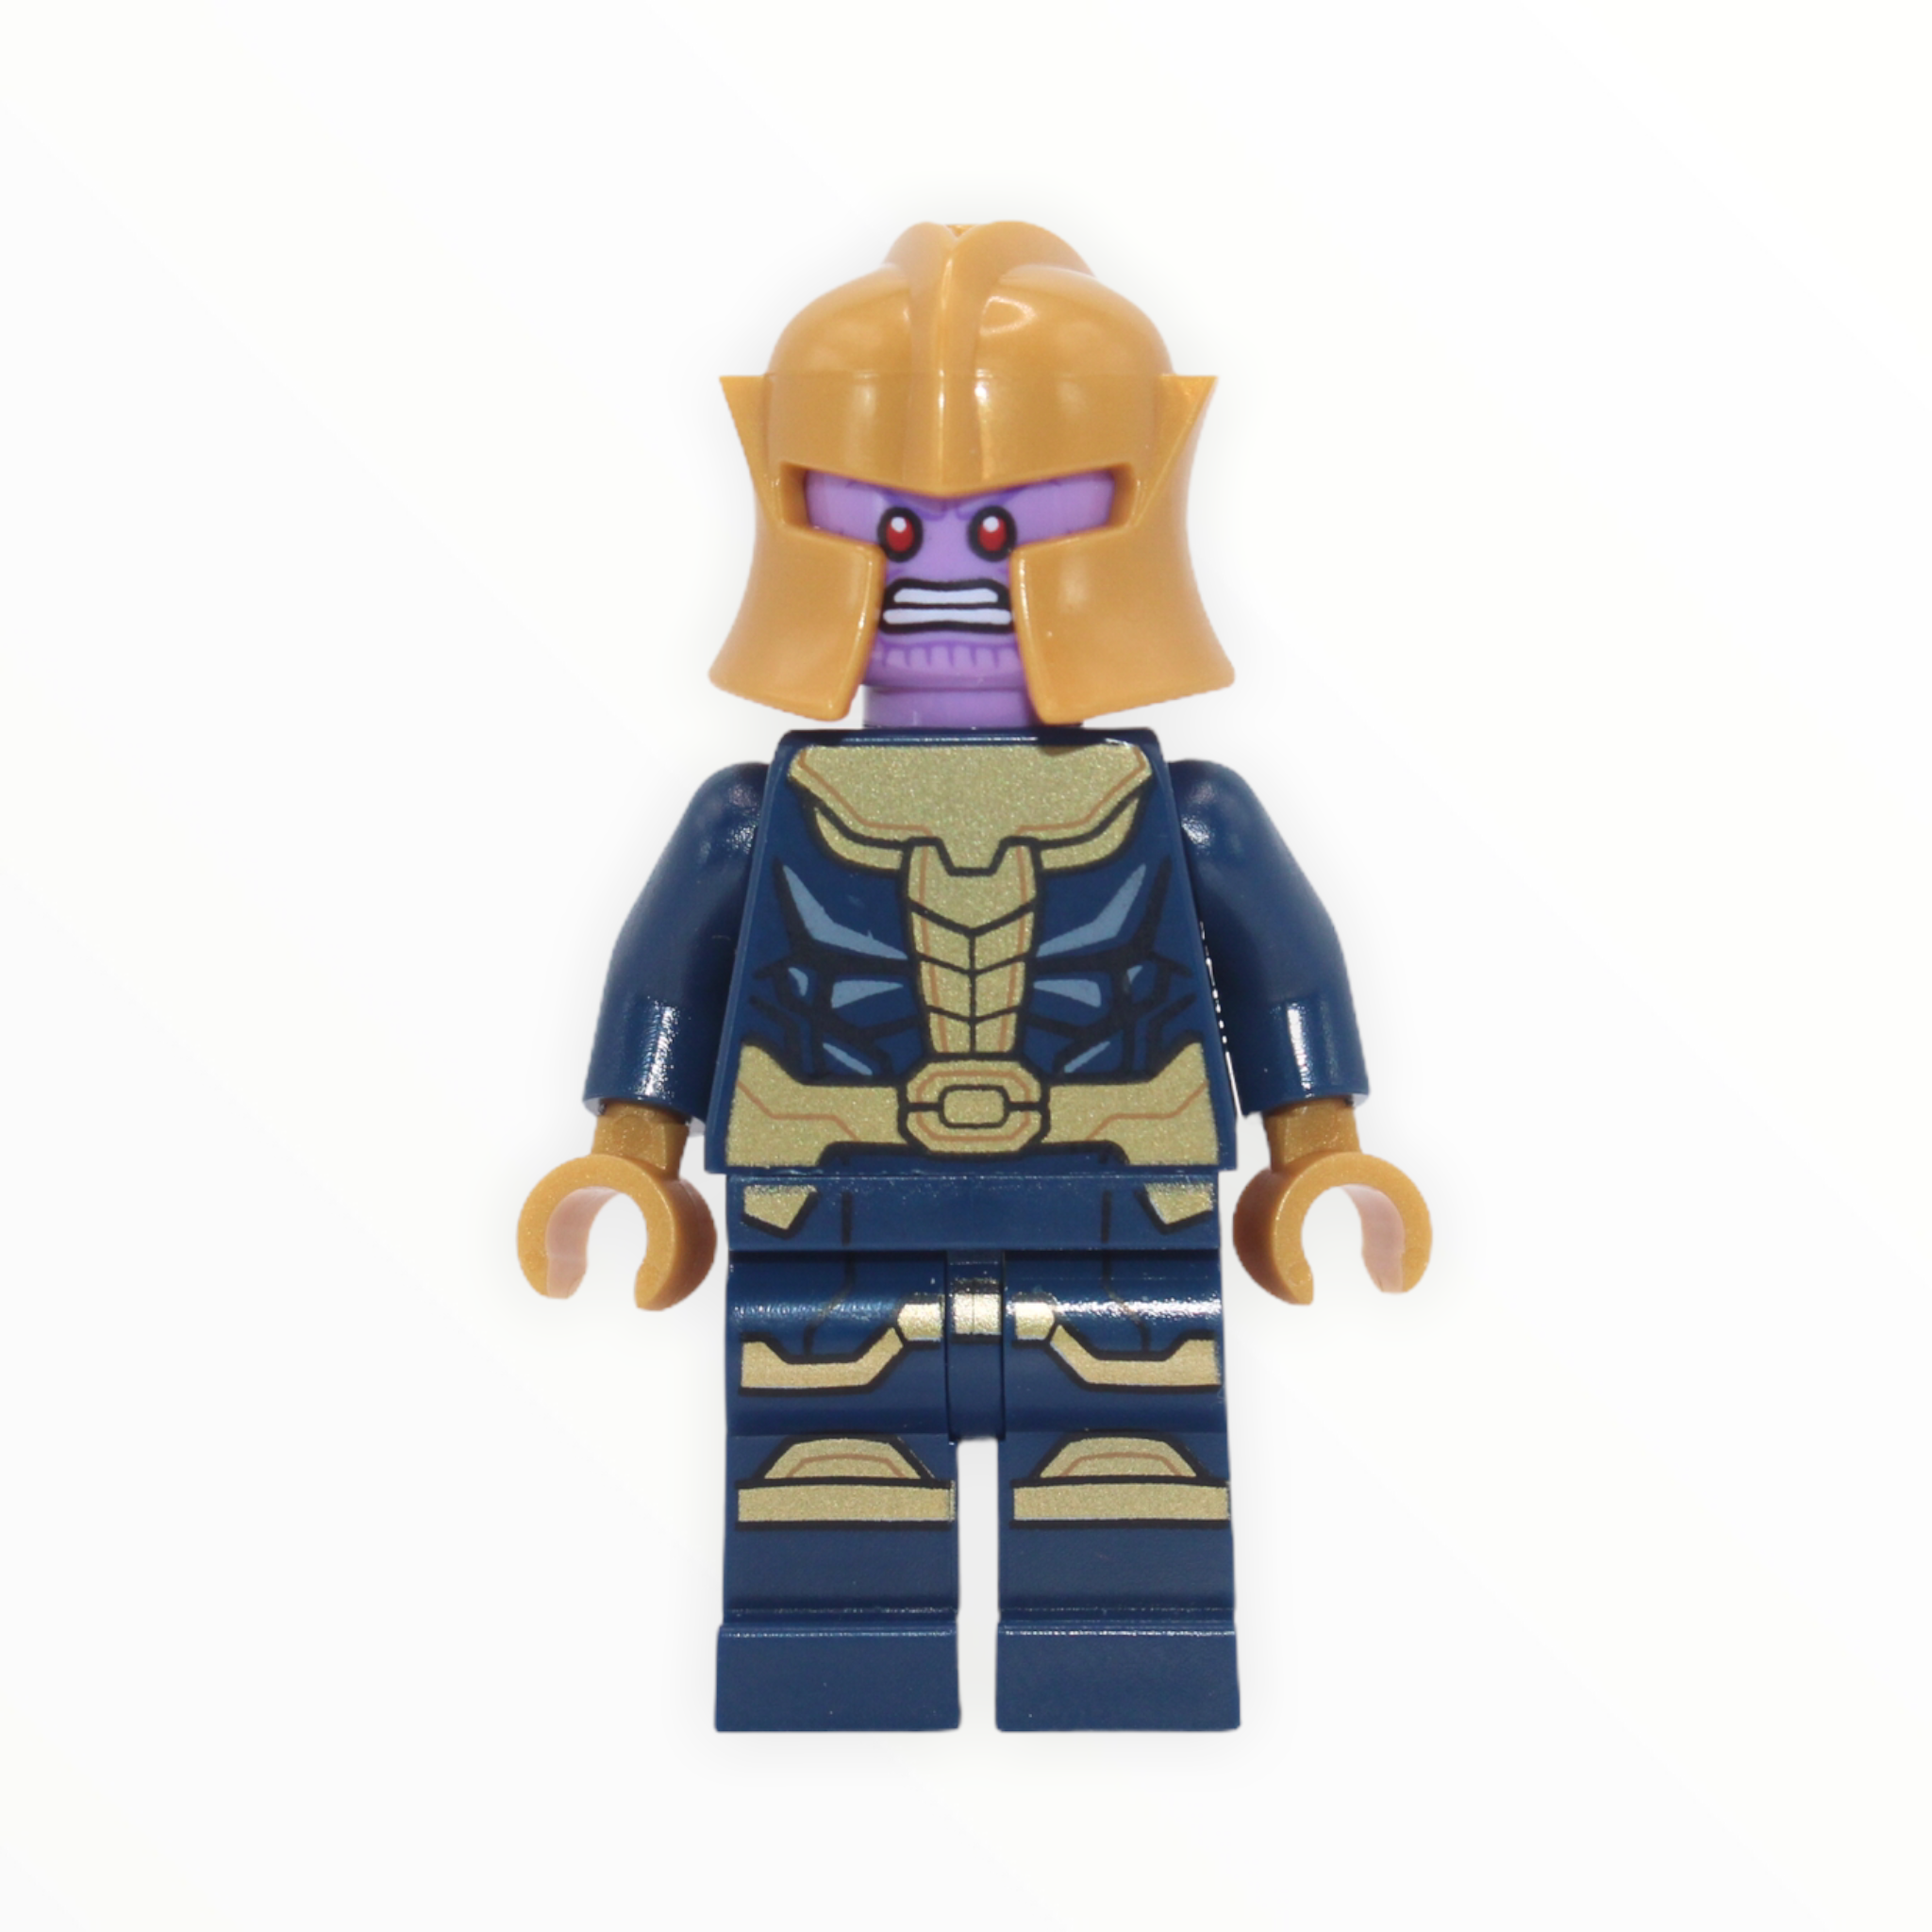 Thanos (printed legs, helmet, 2020)